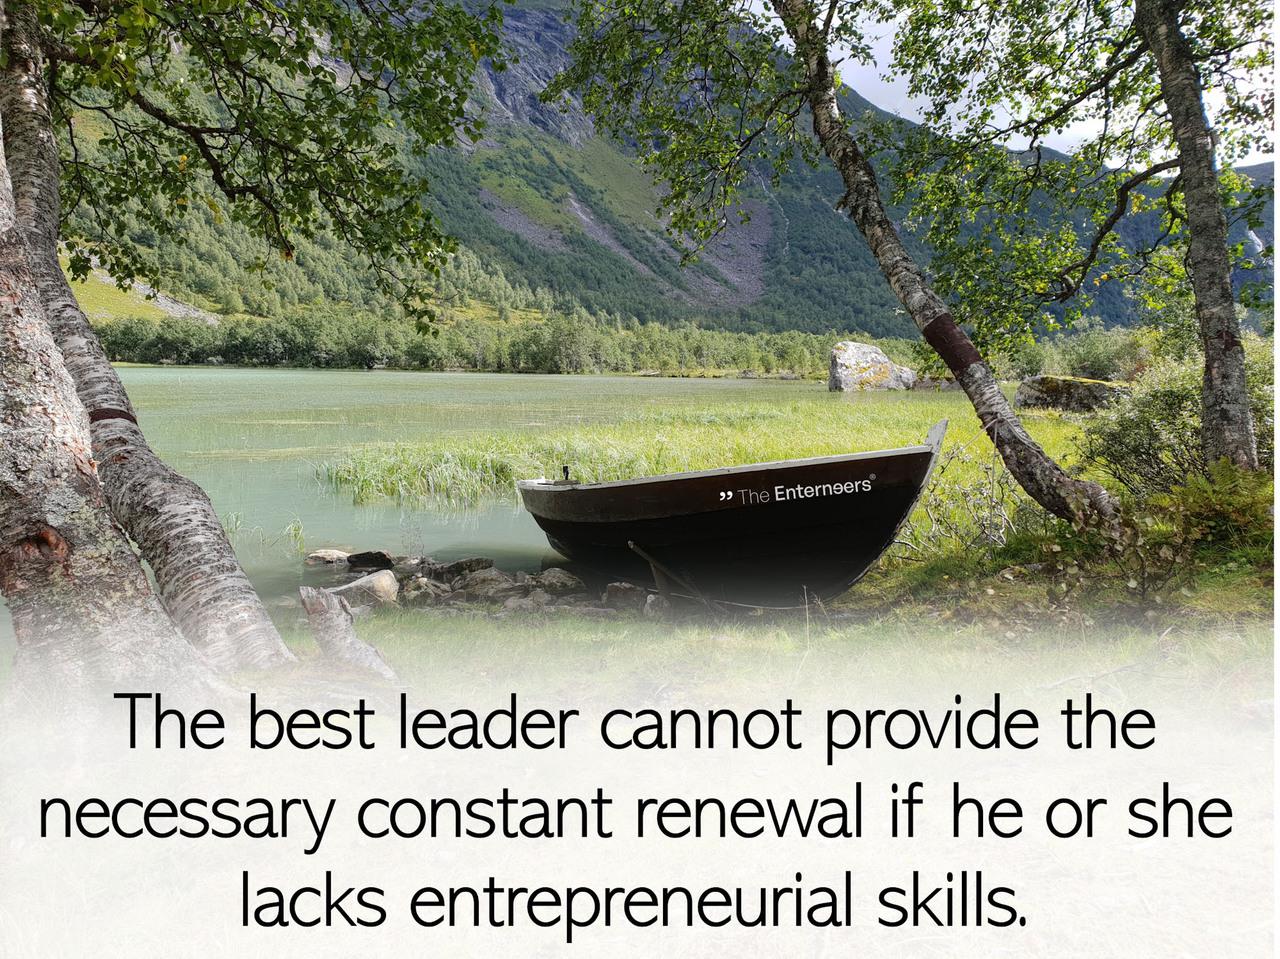 Entrepreneurial skills are essential